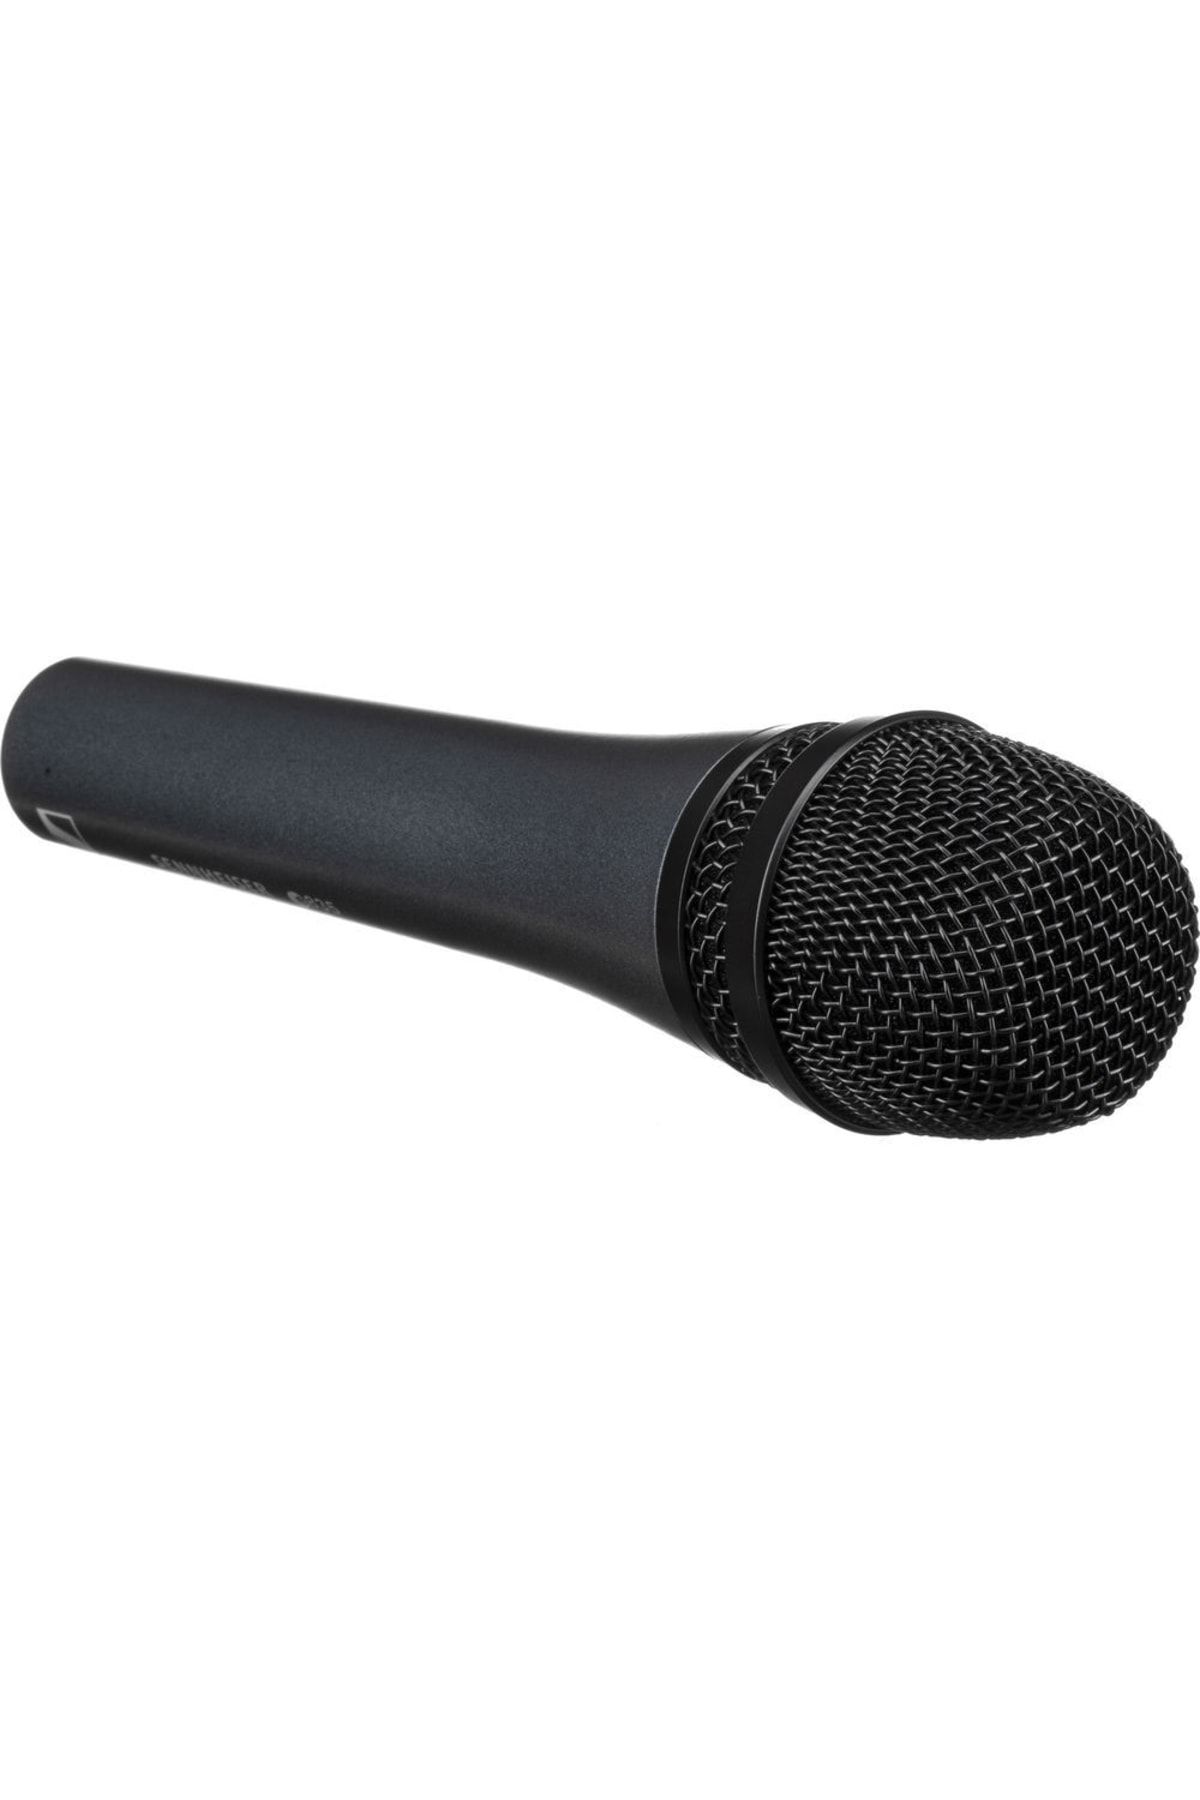 Sennheiser E835 Dynamic Mikrofon